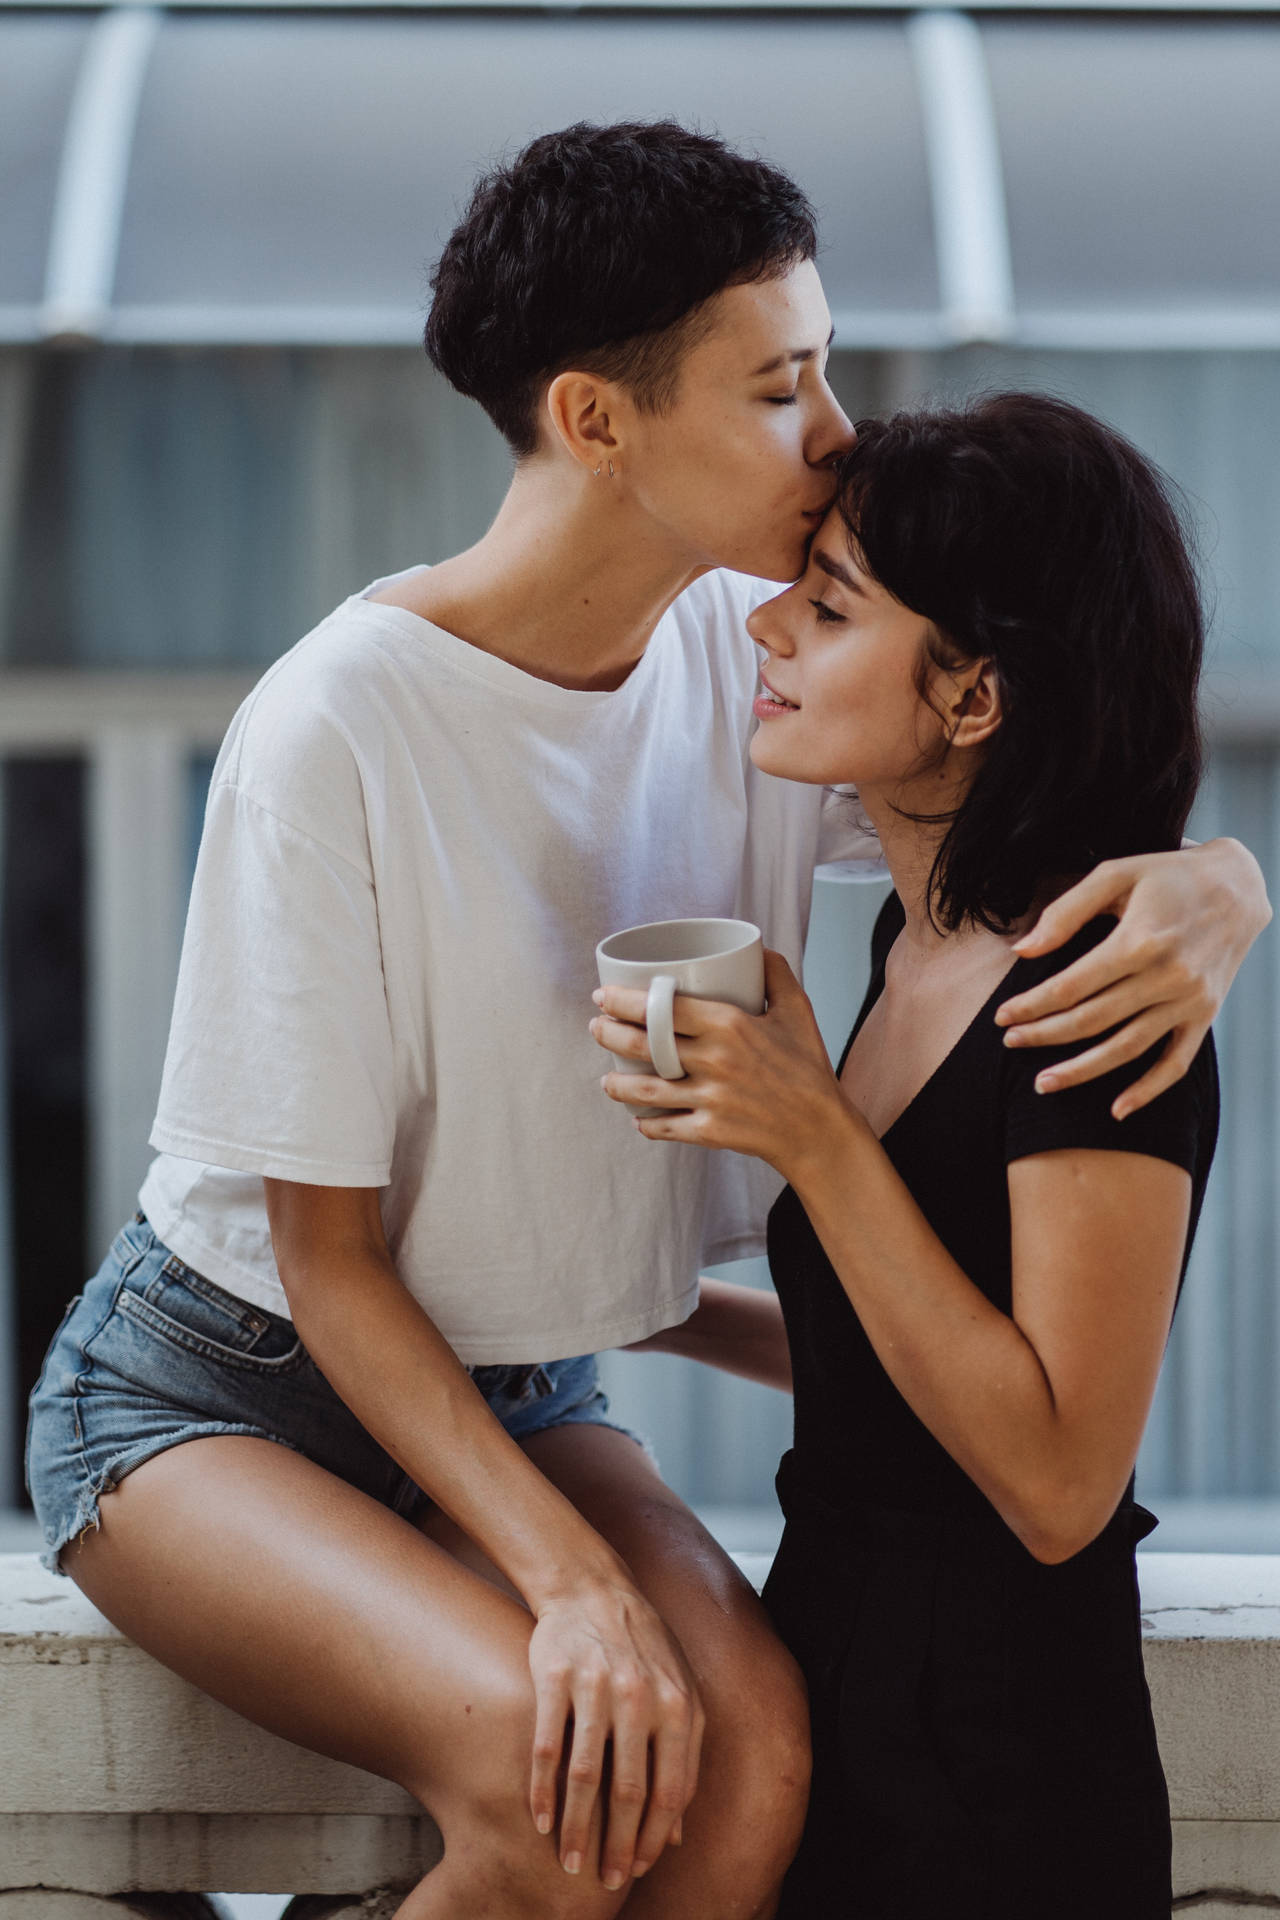 Download Lesbian Girl Forehead Kiss Wallpaper